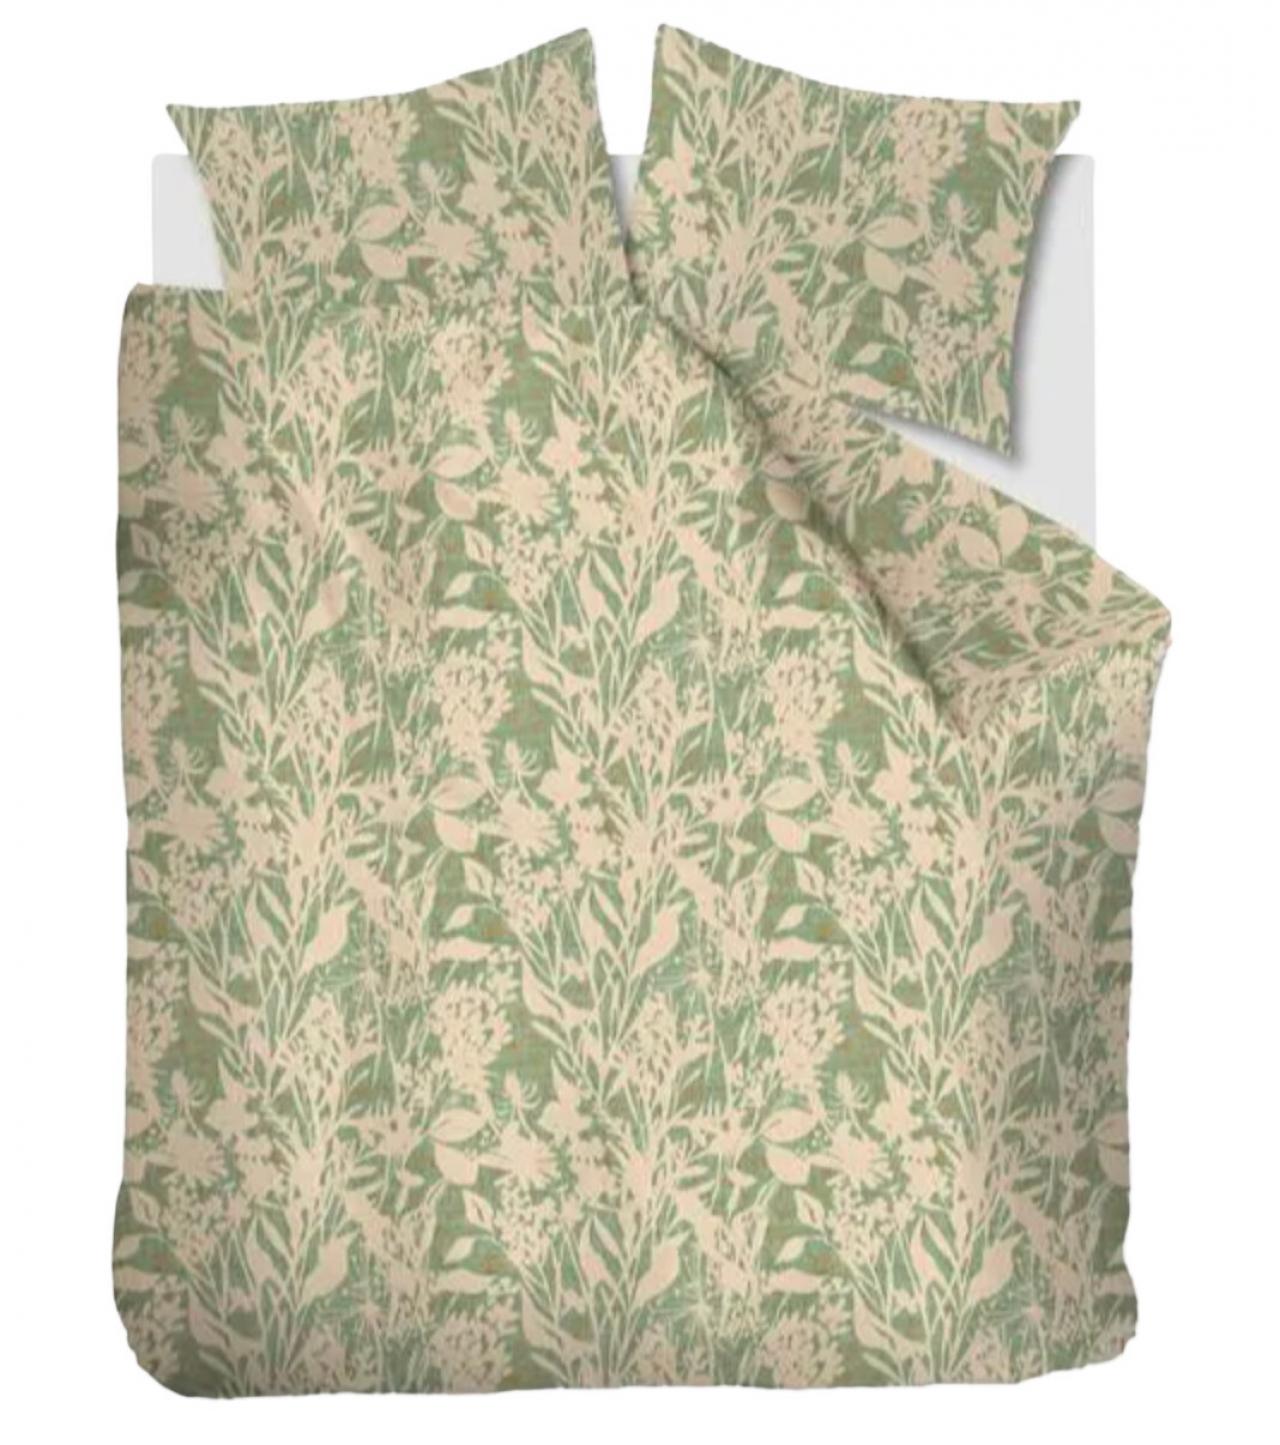 Dekbedovertrek ‘Botanical’ - vanaf € 69,95 - Smulders Textiel.